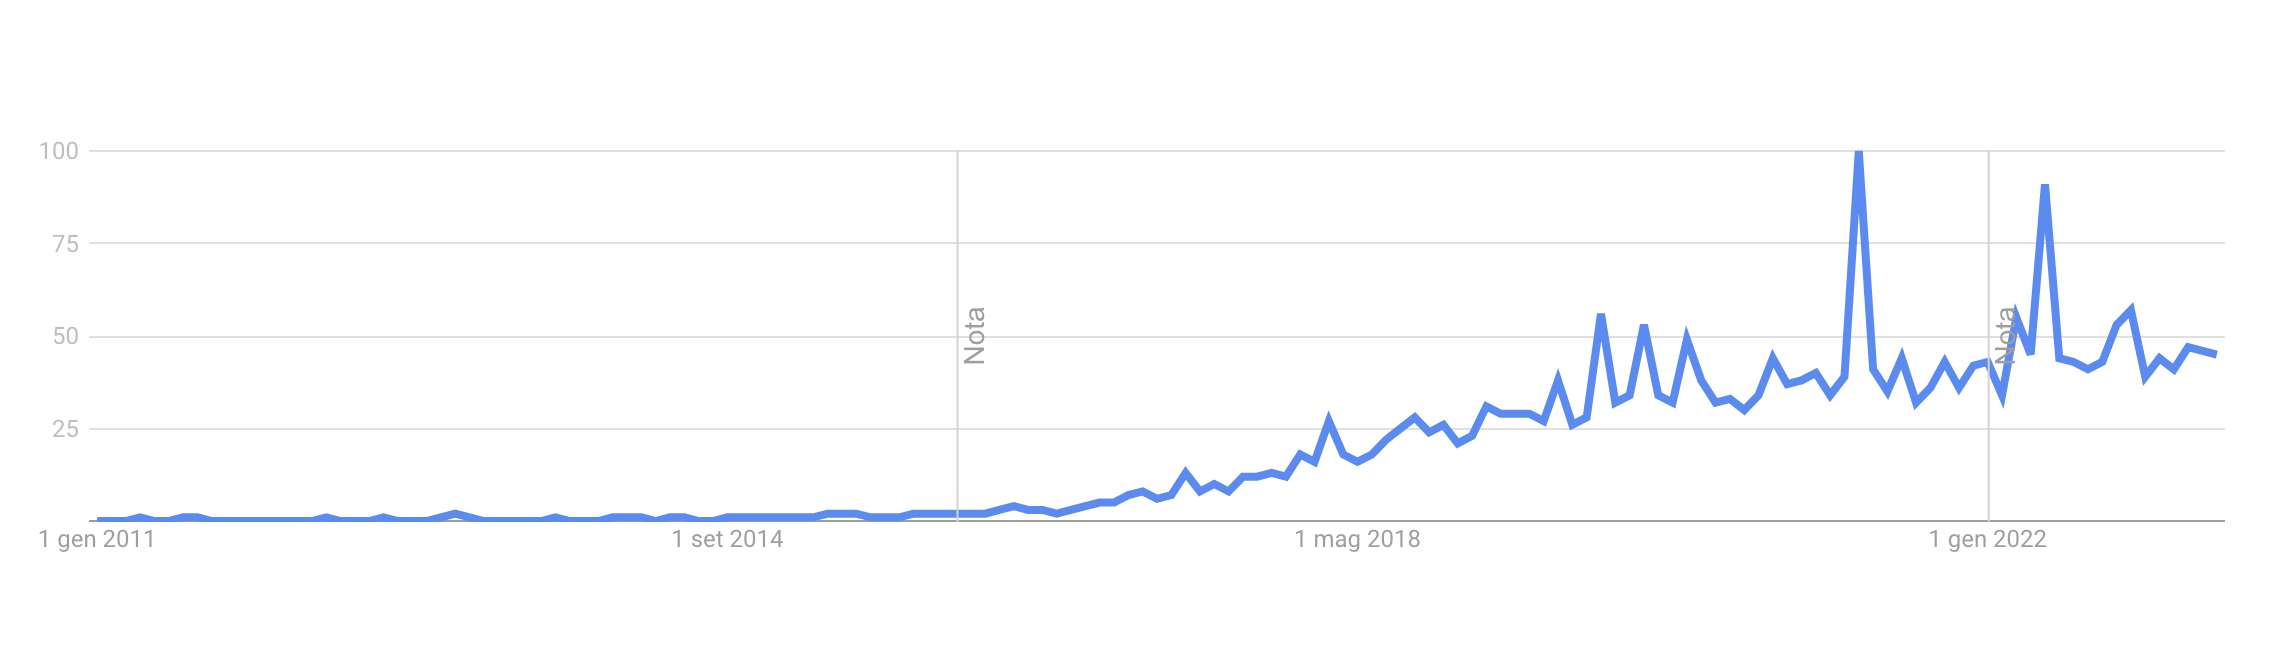 Ricerca termine "Influencer" su Google Trends dal 2011 al 2023